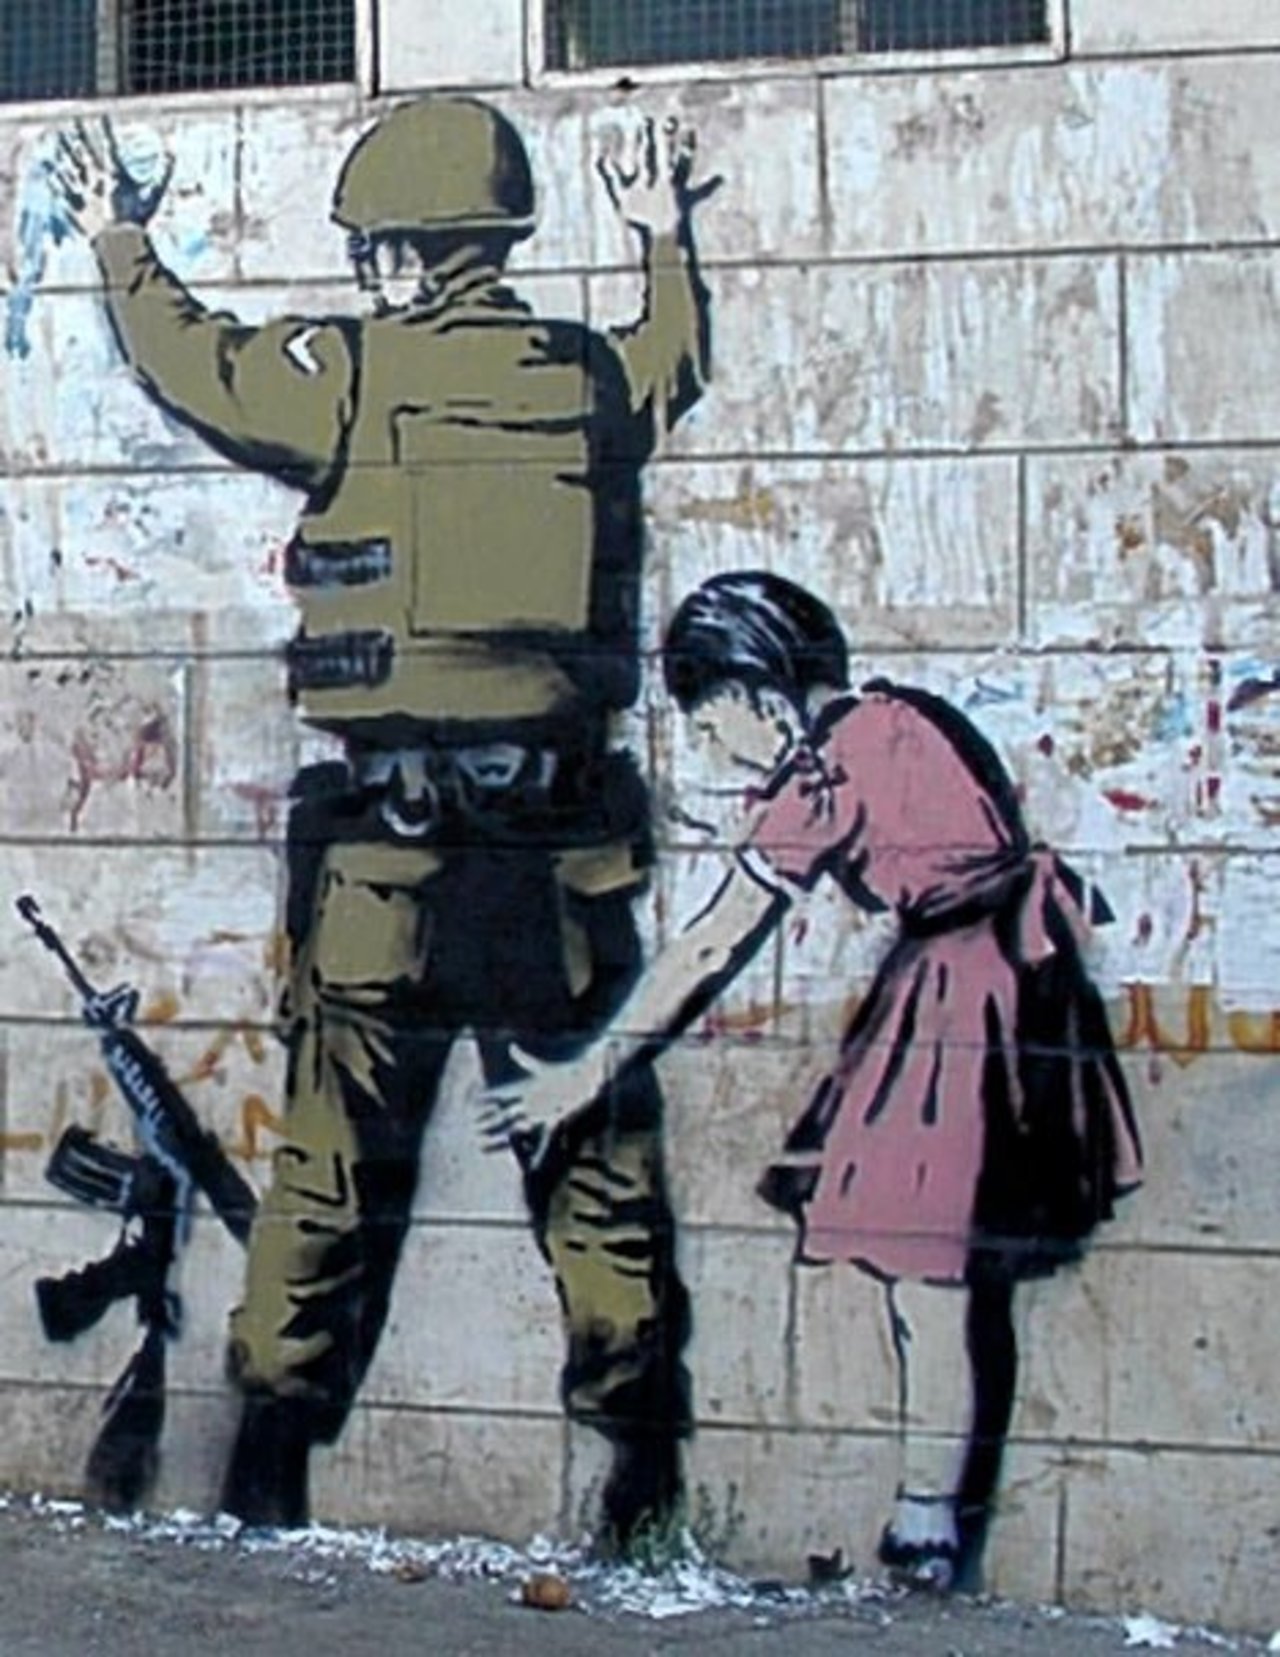 Banksy #streetart #urbanart #graffiti https://t.co/p11SggcNw4